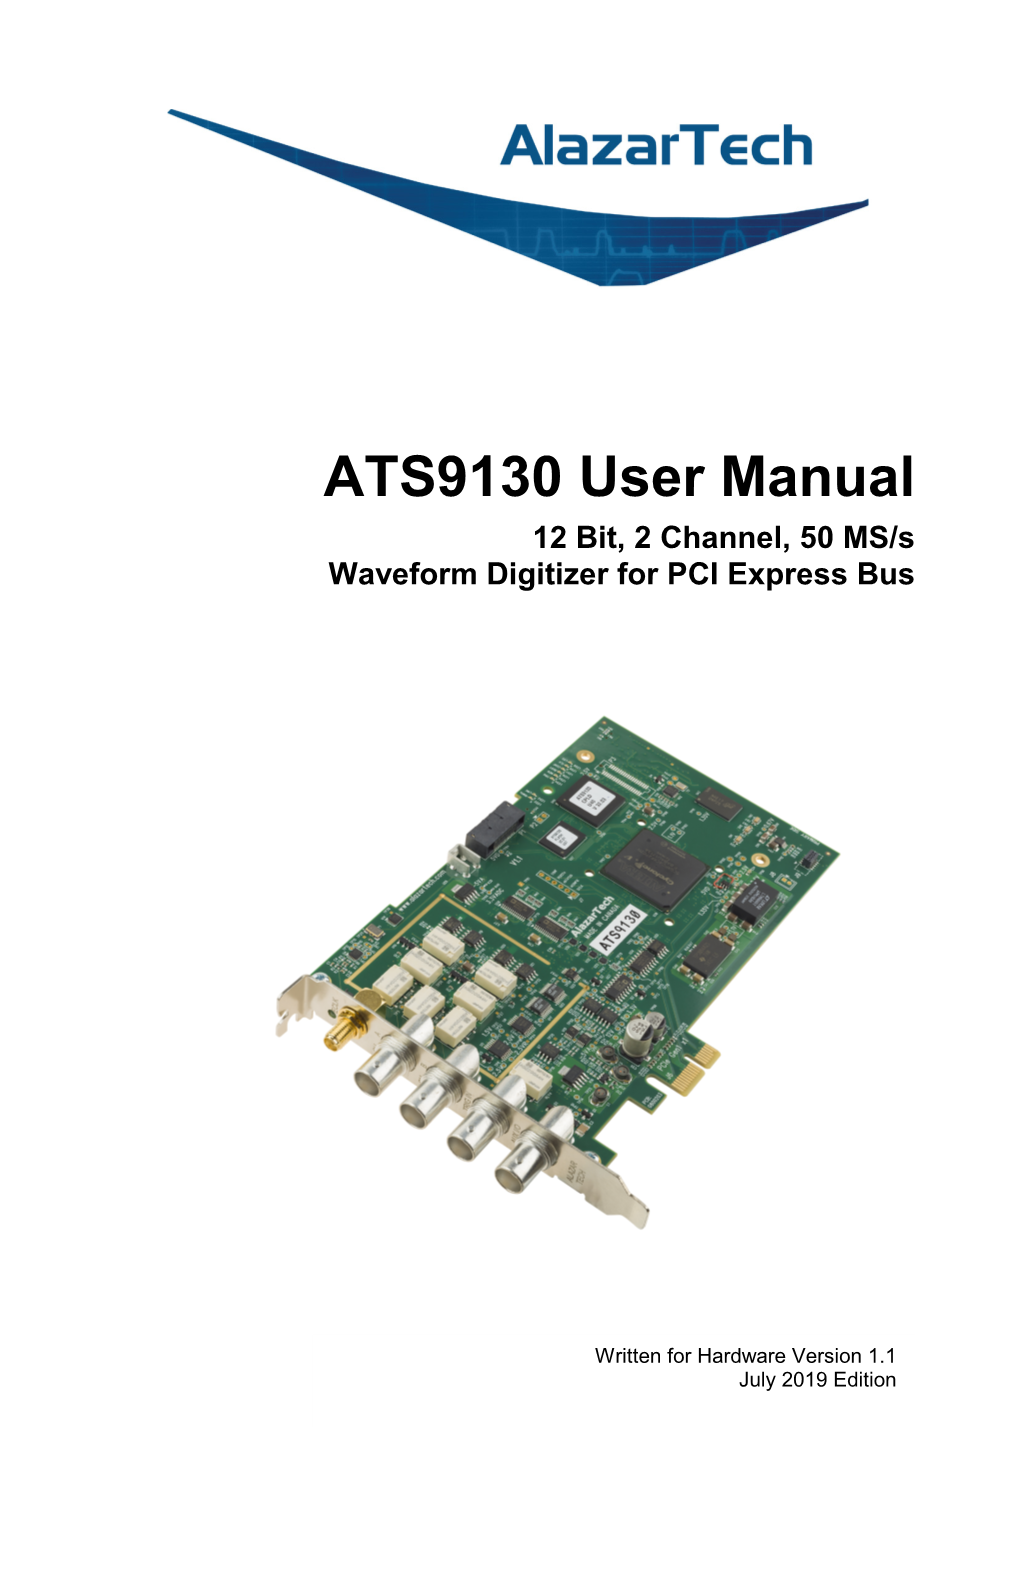 ATS9130 User Manual 1 2 Bit, 2 Channel, 50 MS/S Waveform Digitizer for PCI Express Bus